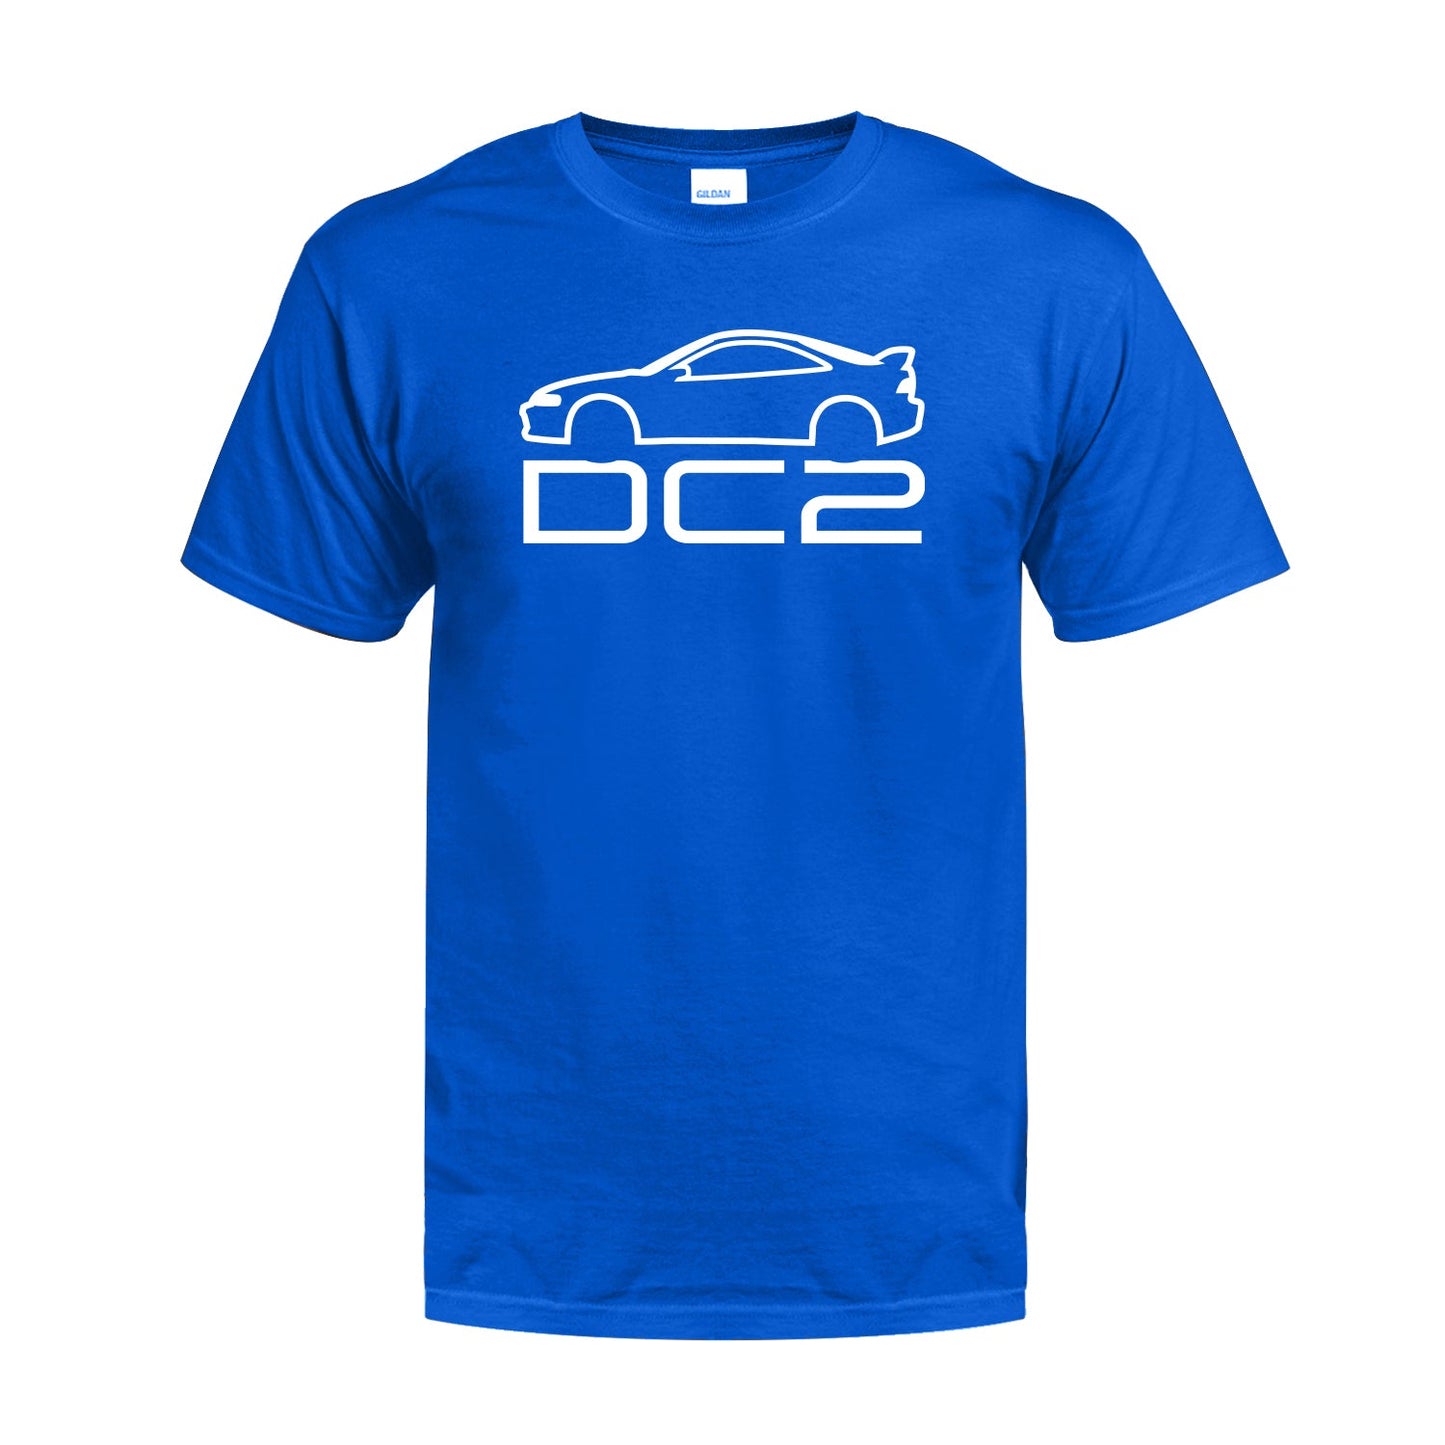 DC2 Integra Inspired Silhouette T-Shirt